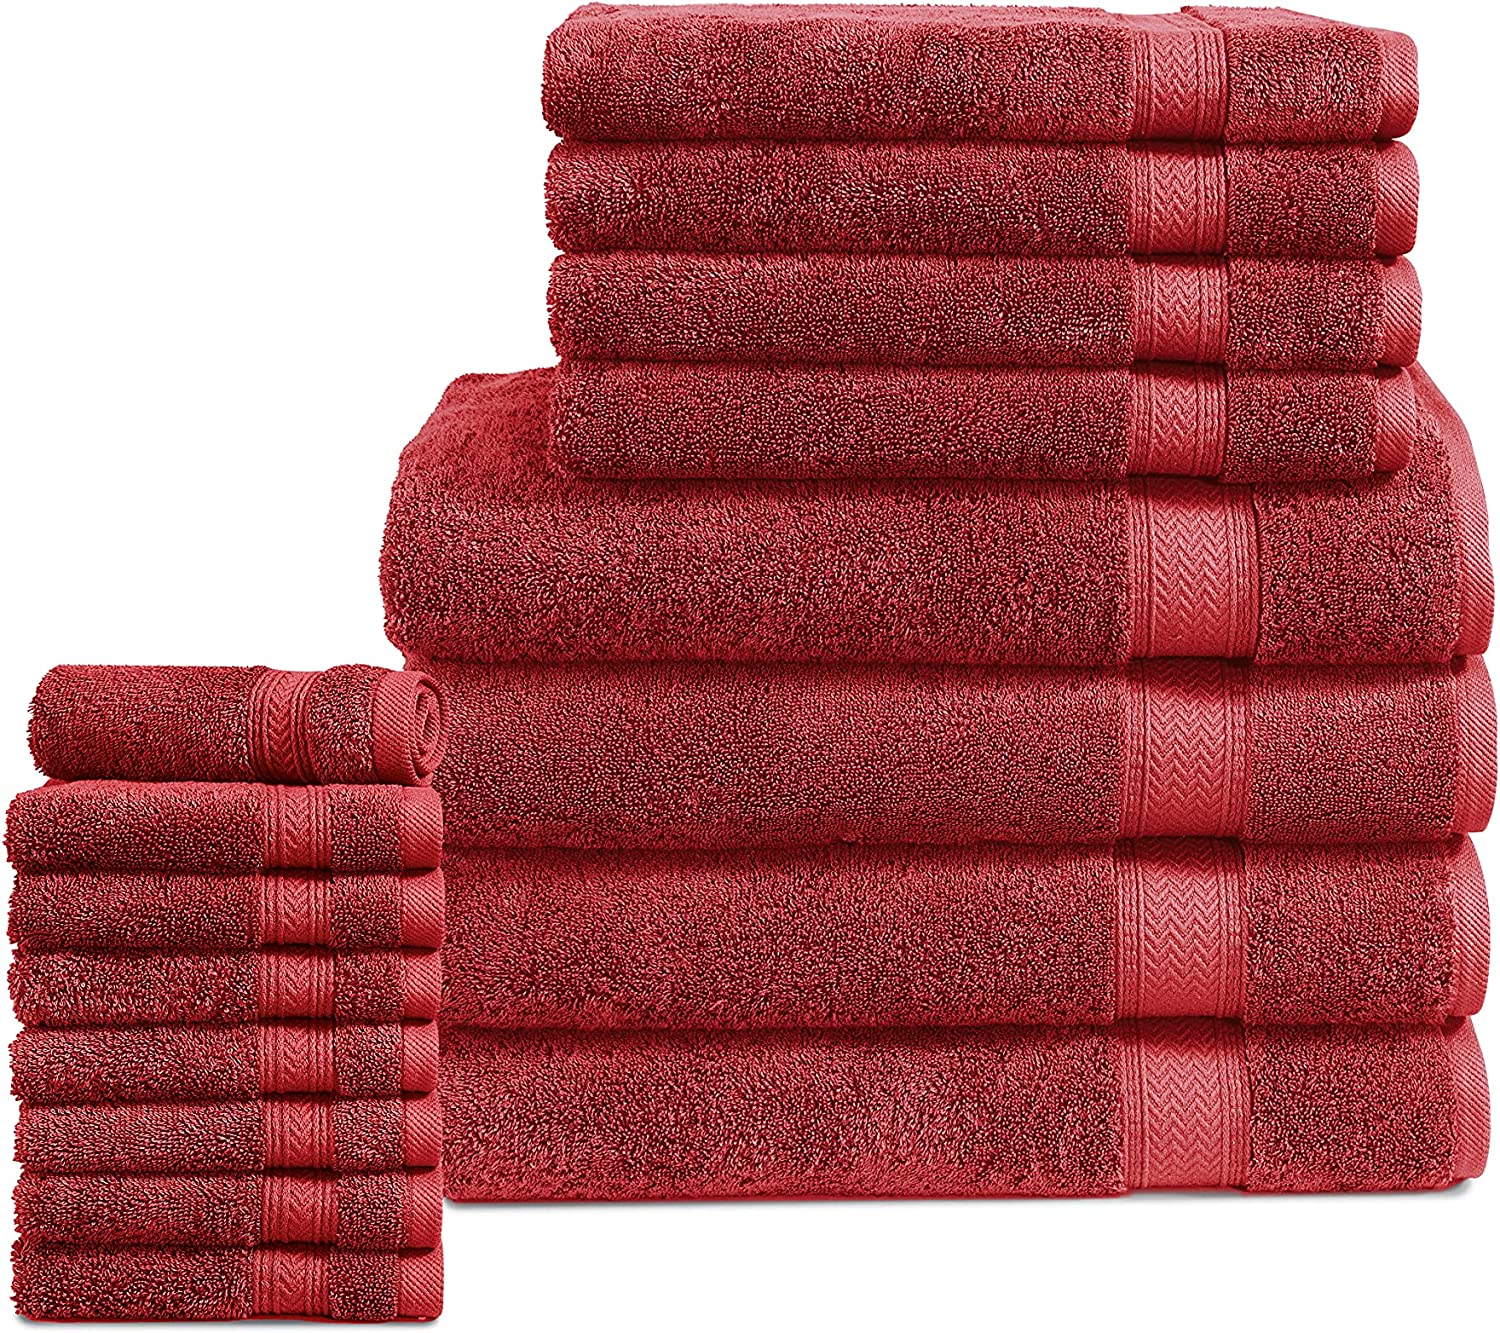 LANE LINEN 100% Cotton Bath Towels for Bathroom Set-6 PC Bathroom Towel  Set, 2 B